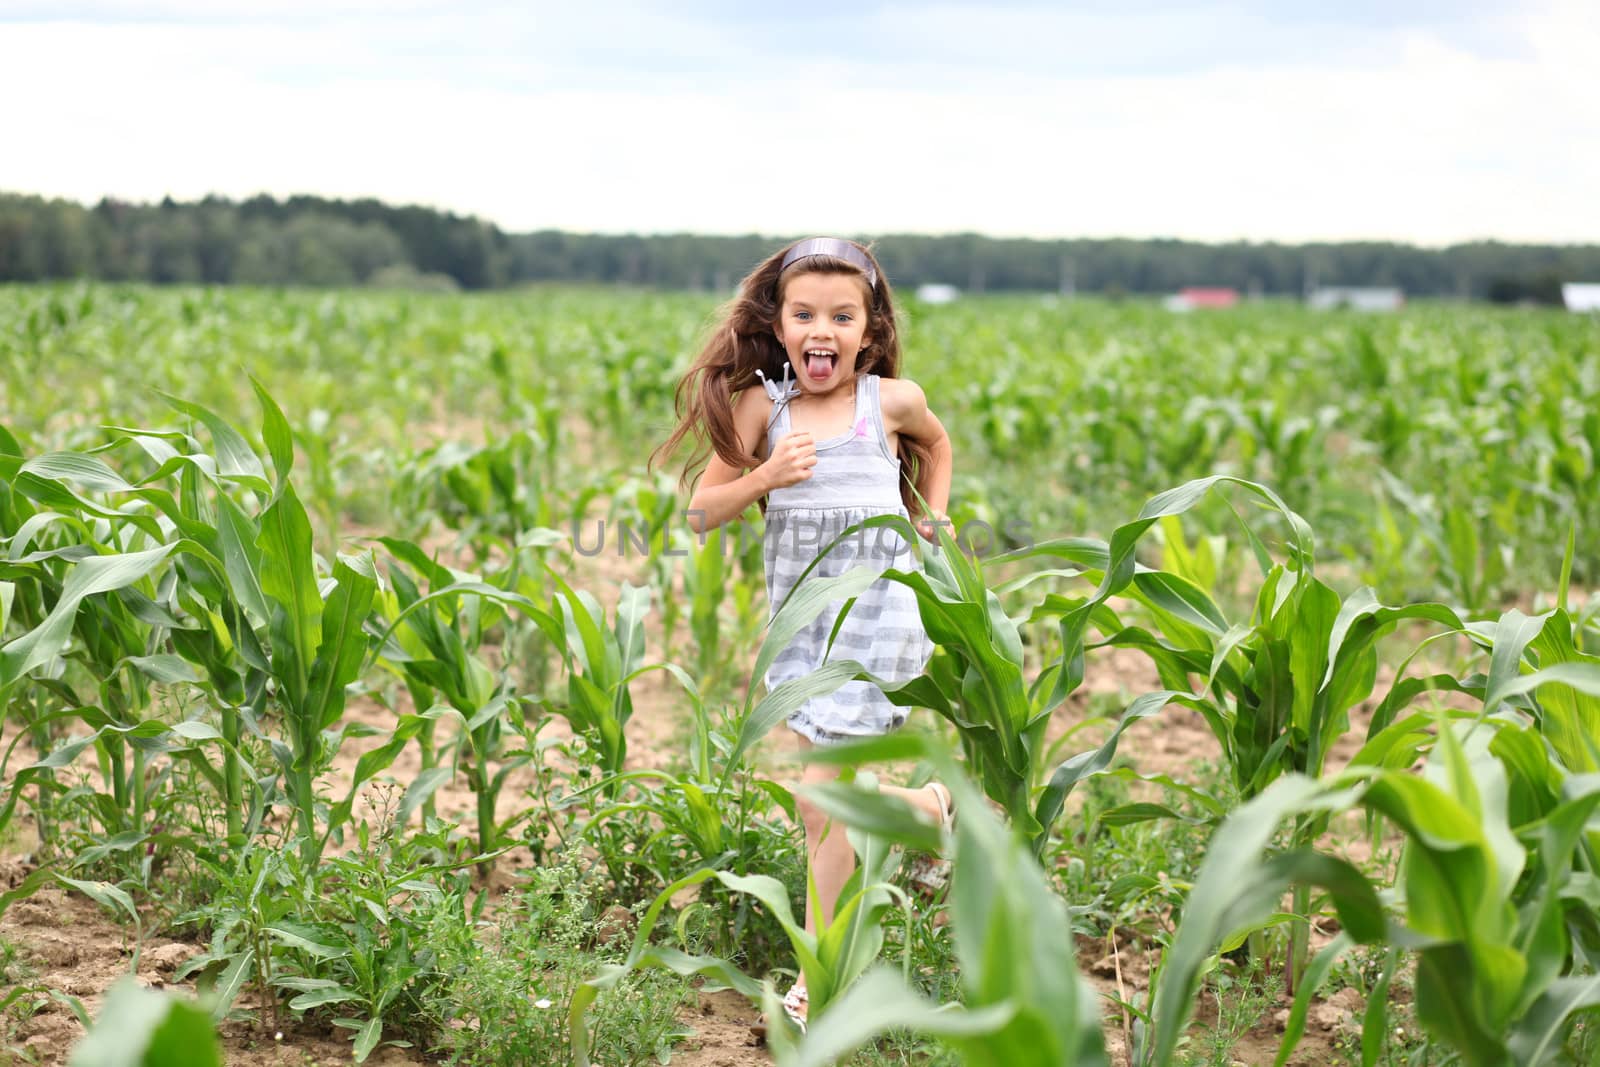 Joyful little girl running through the corn field by andersonrise